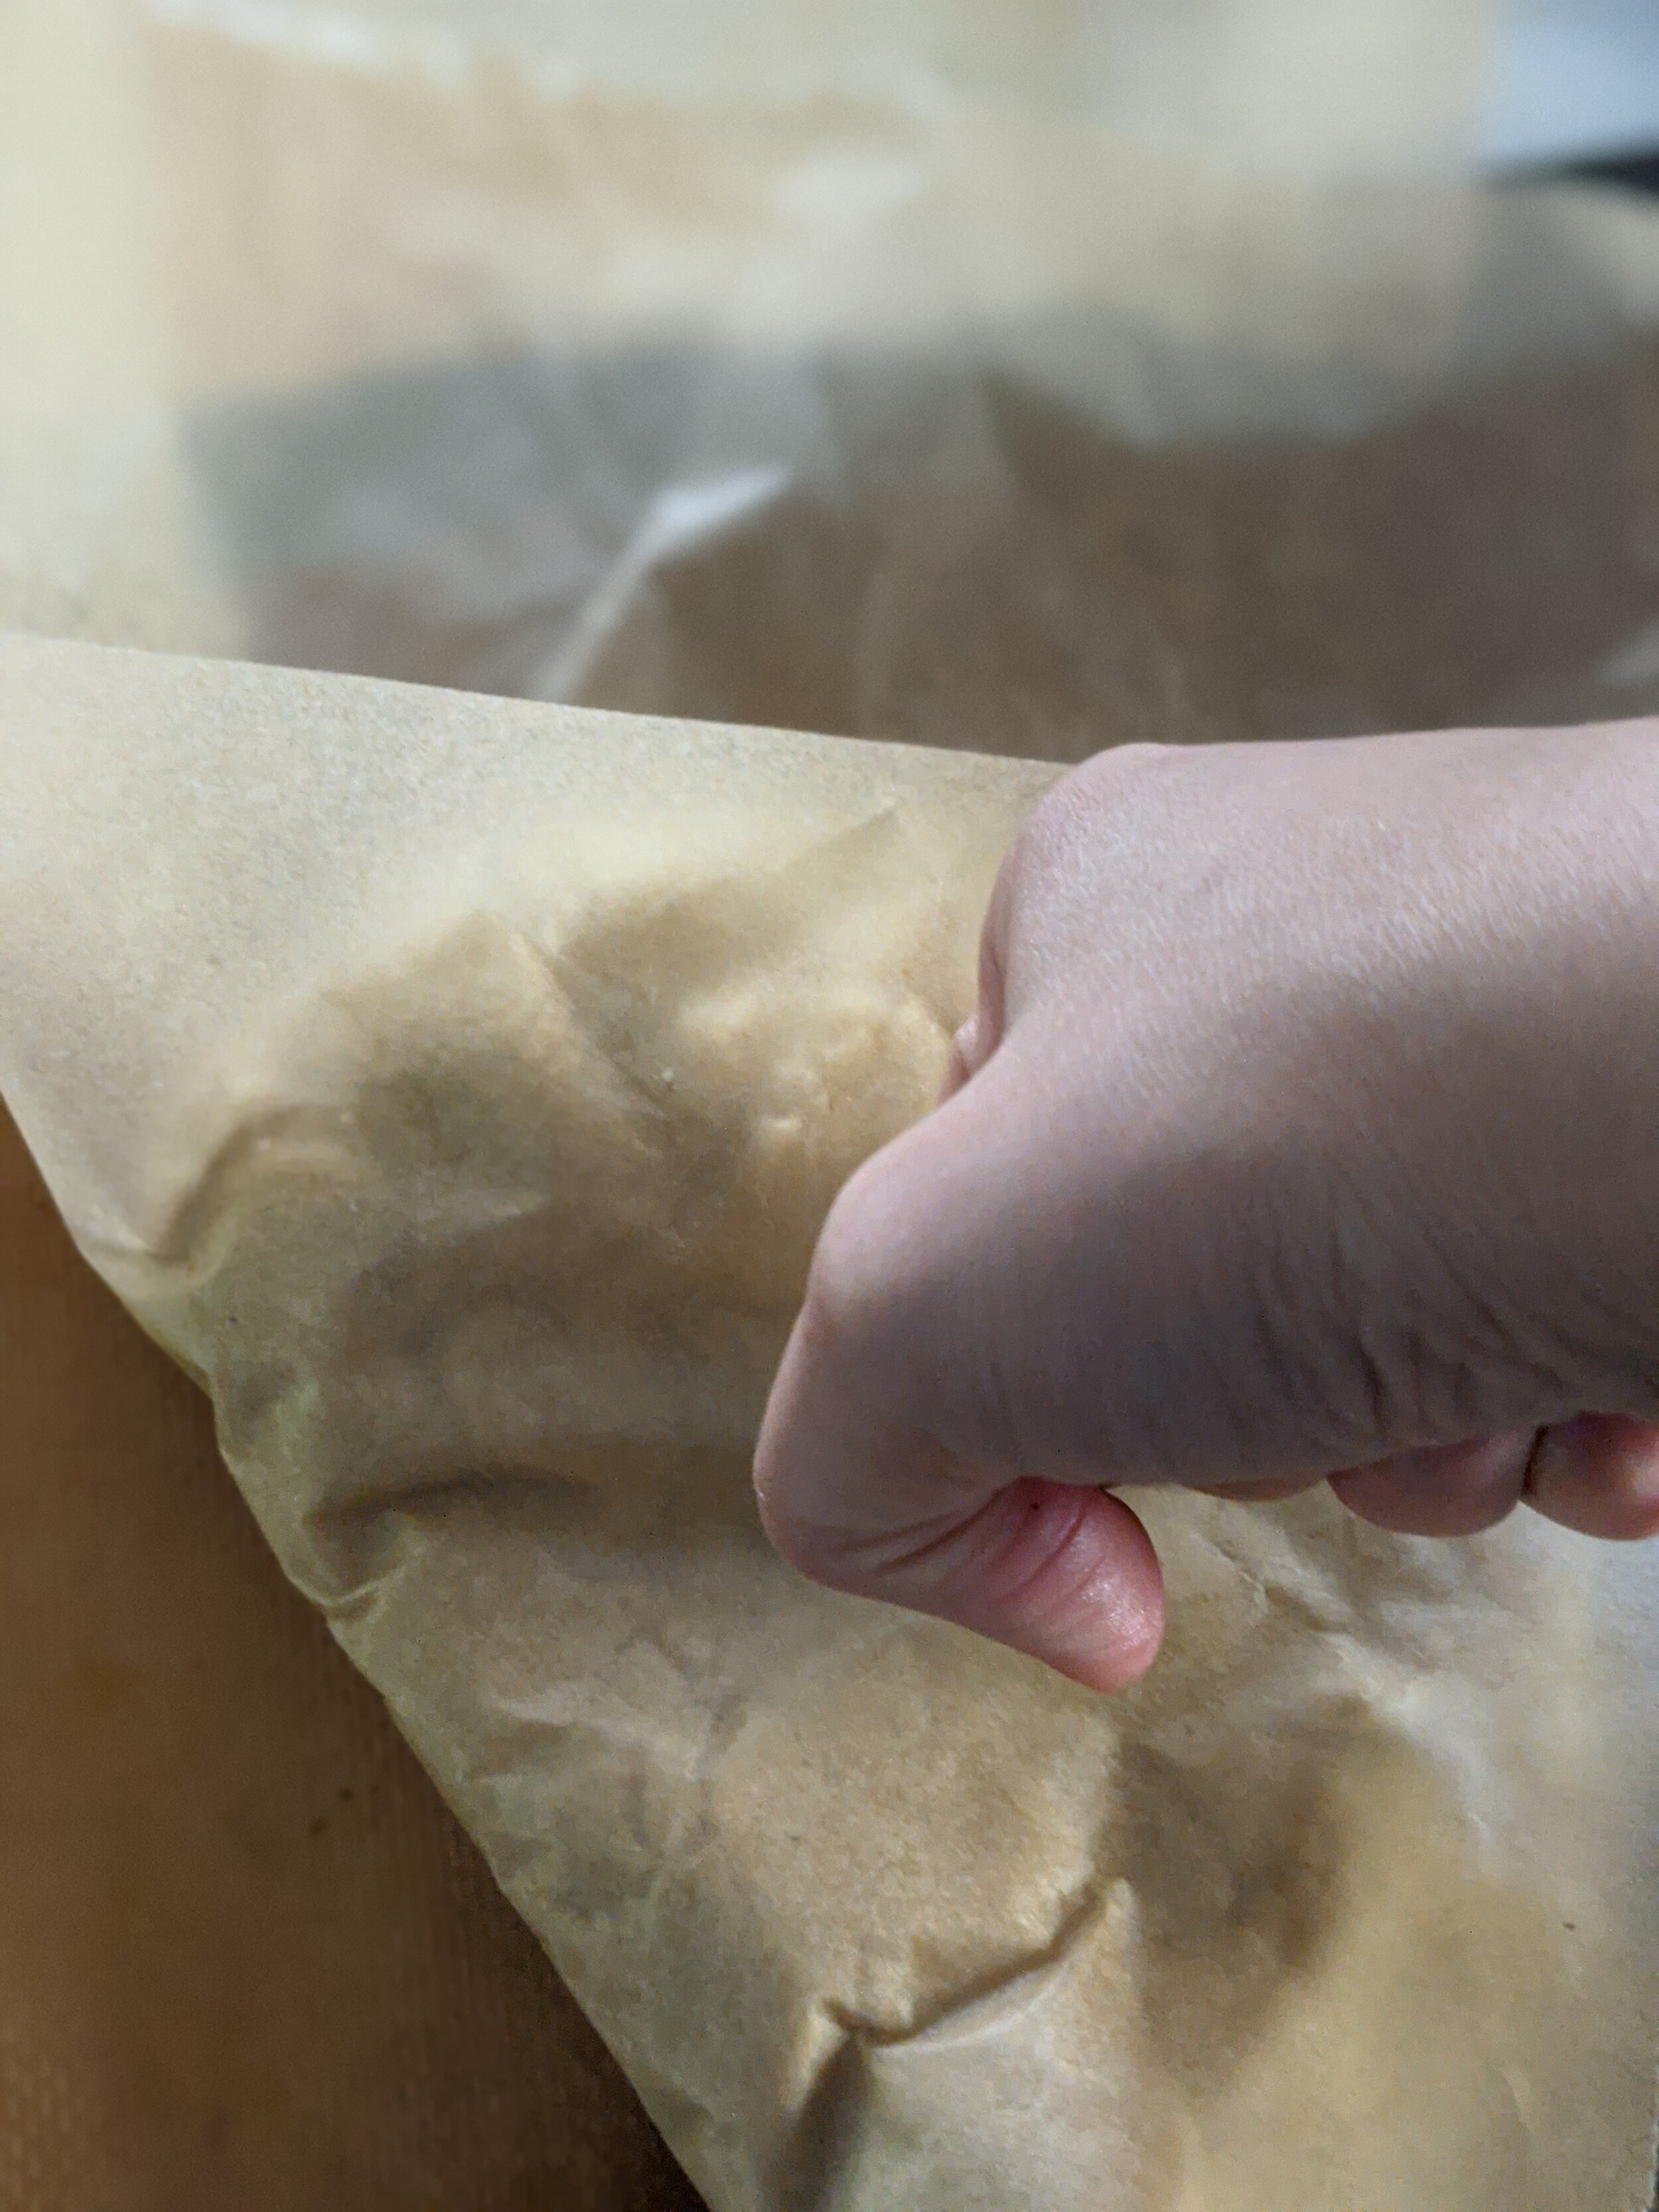 knead to form a dough